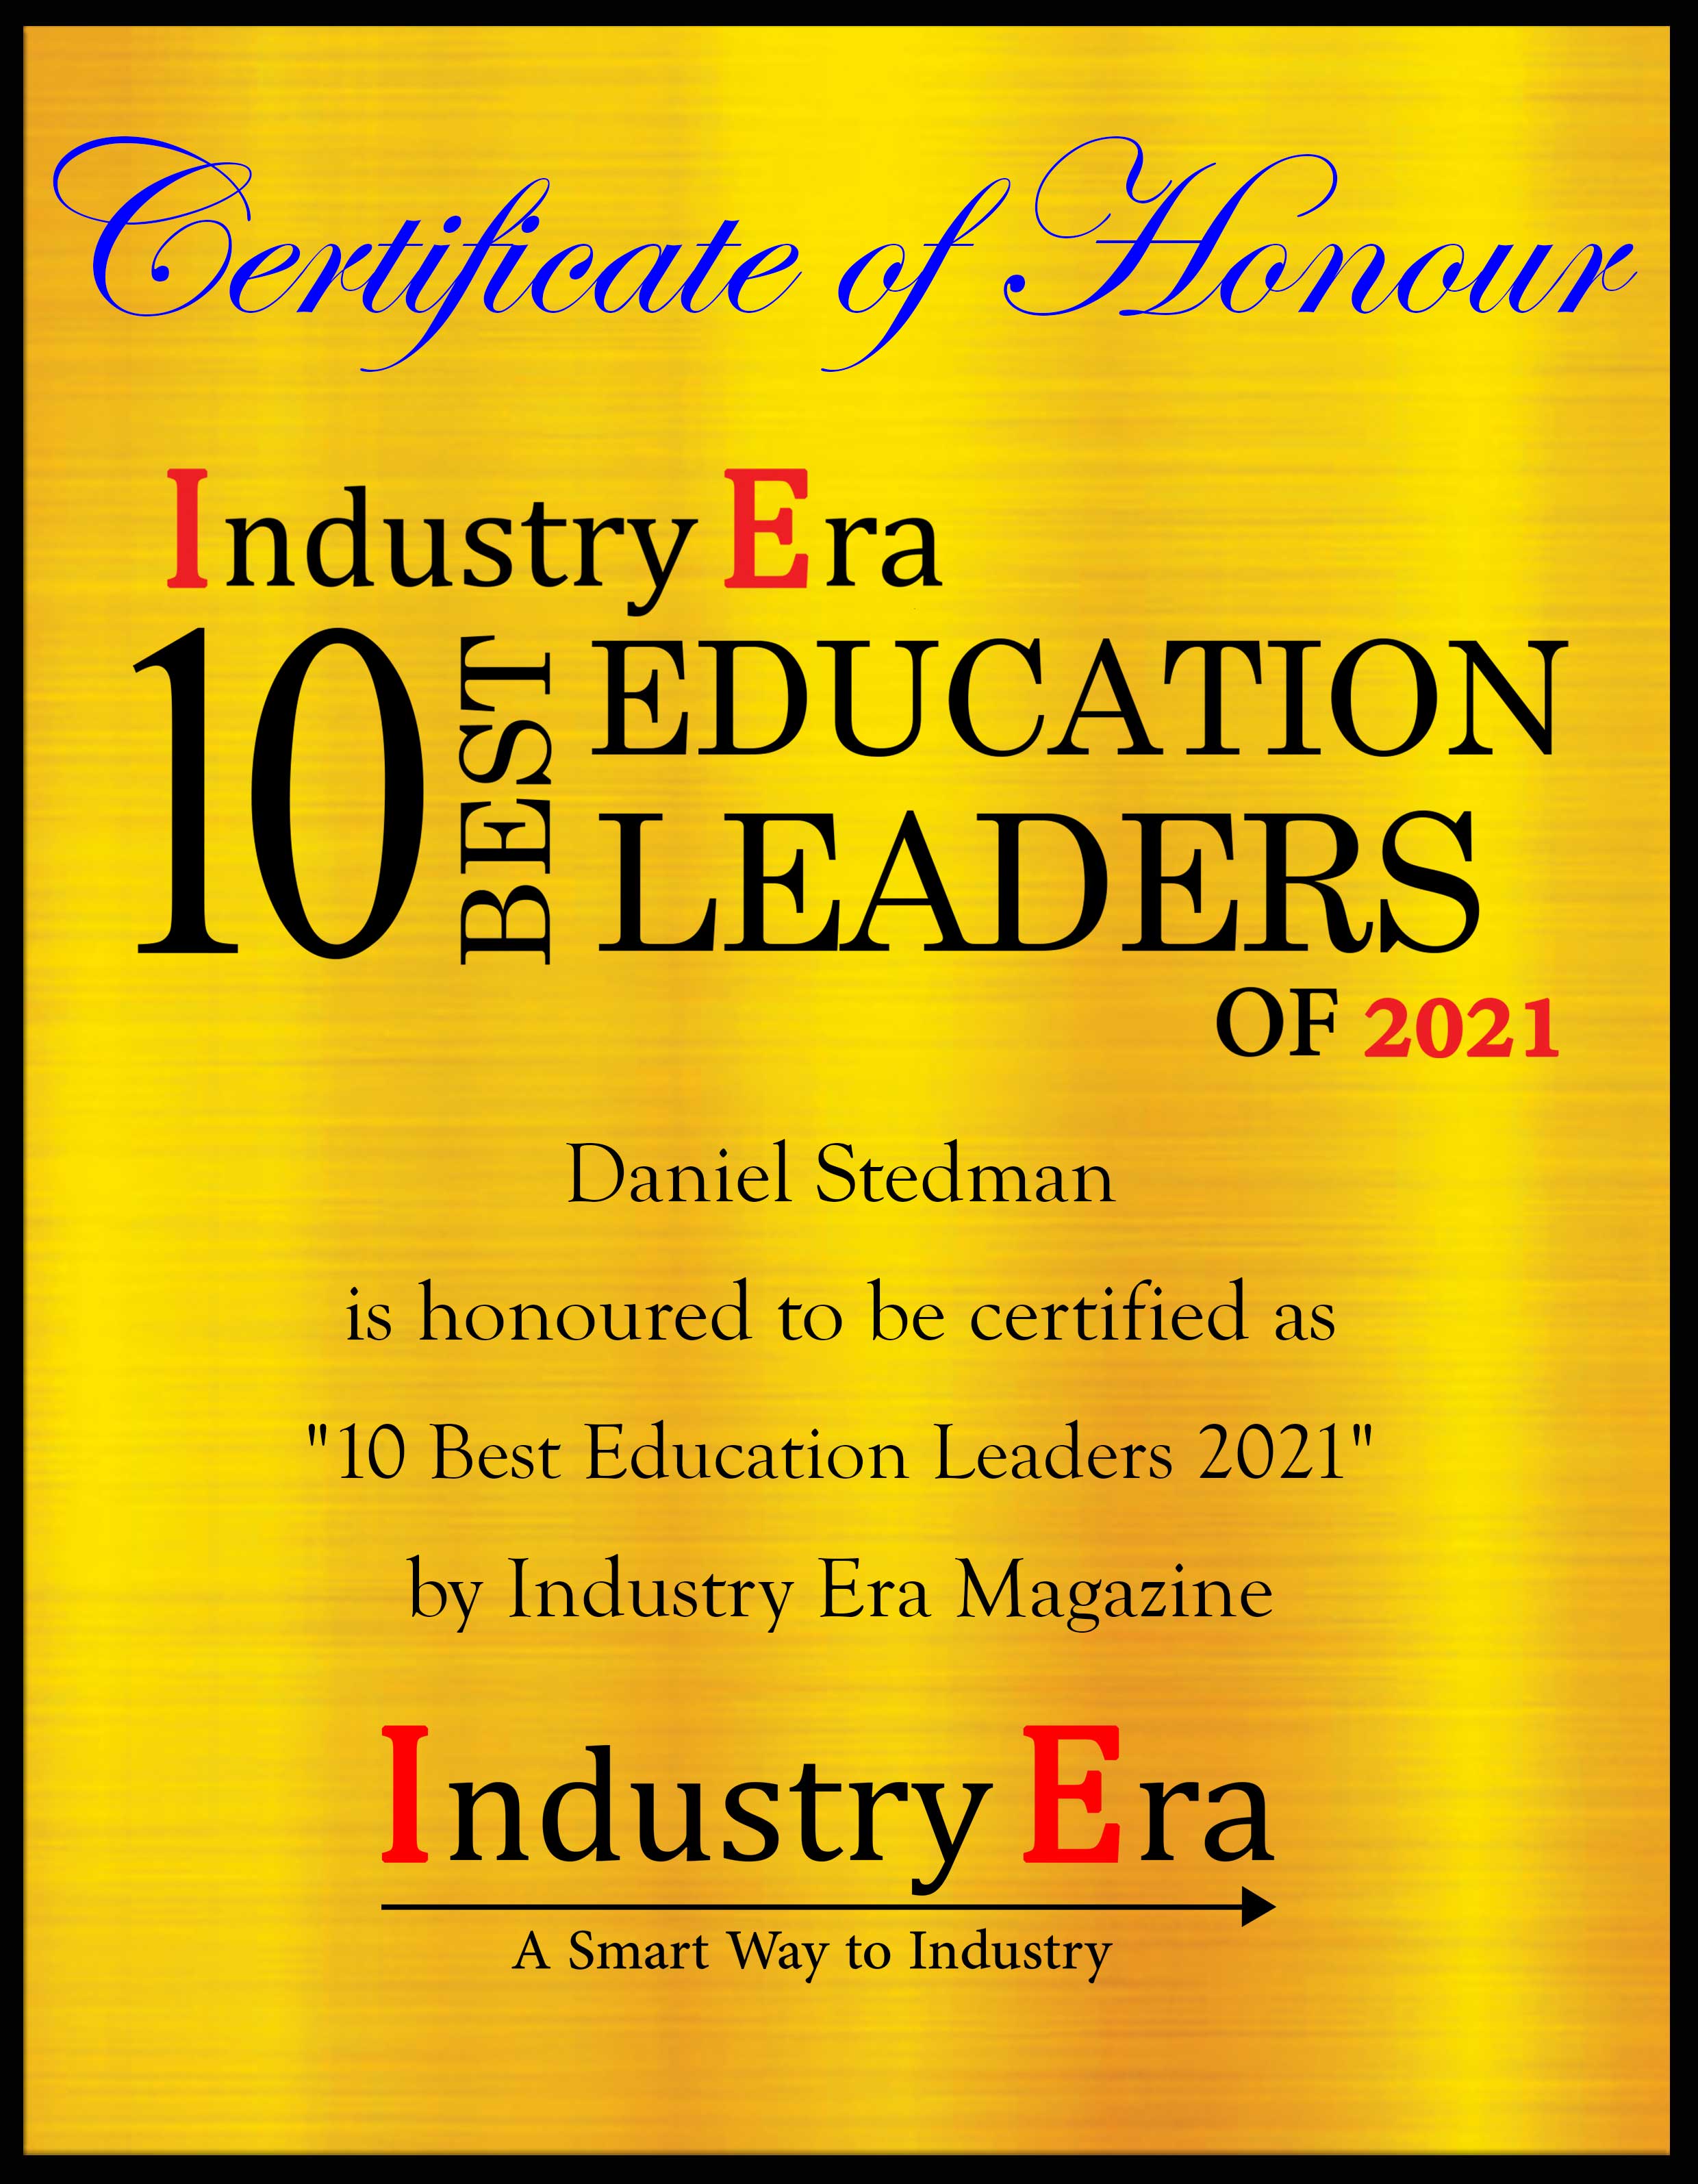 Daniel Stedman, Founder and CEO of Pressto Certificate